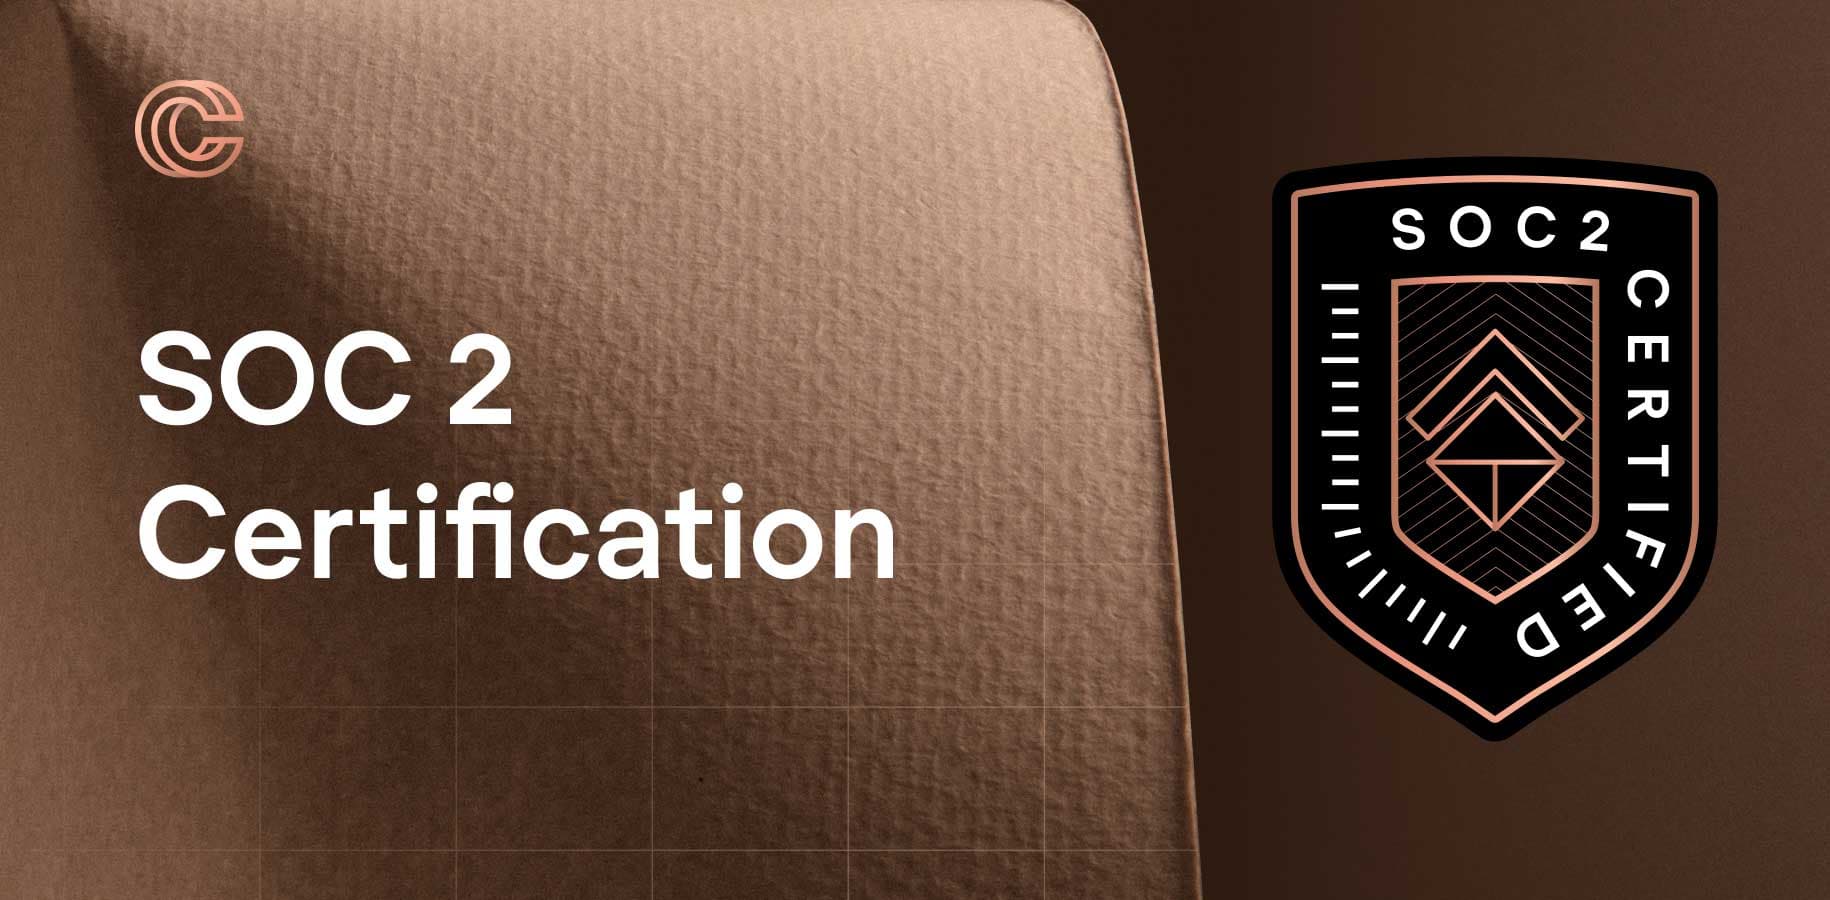 SOC2 certification